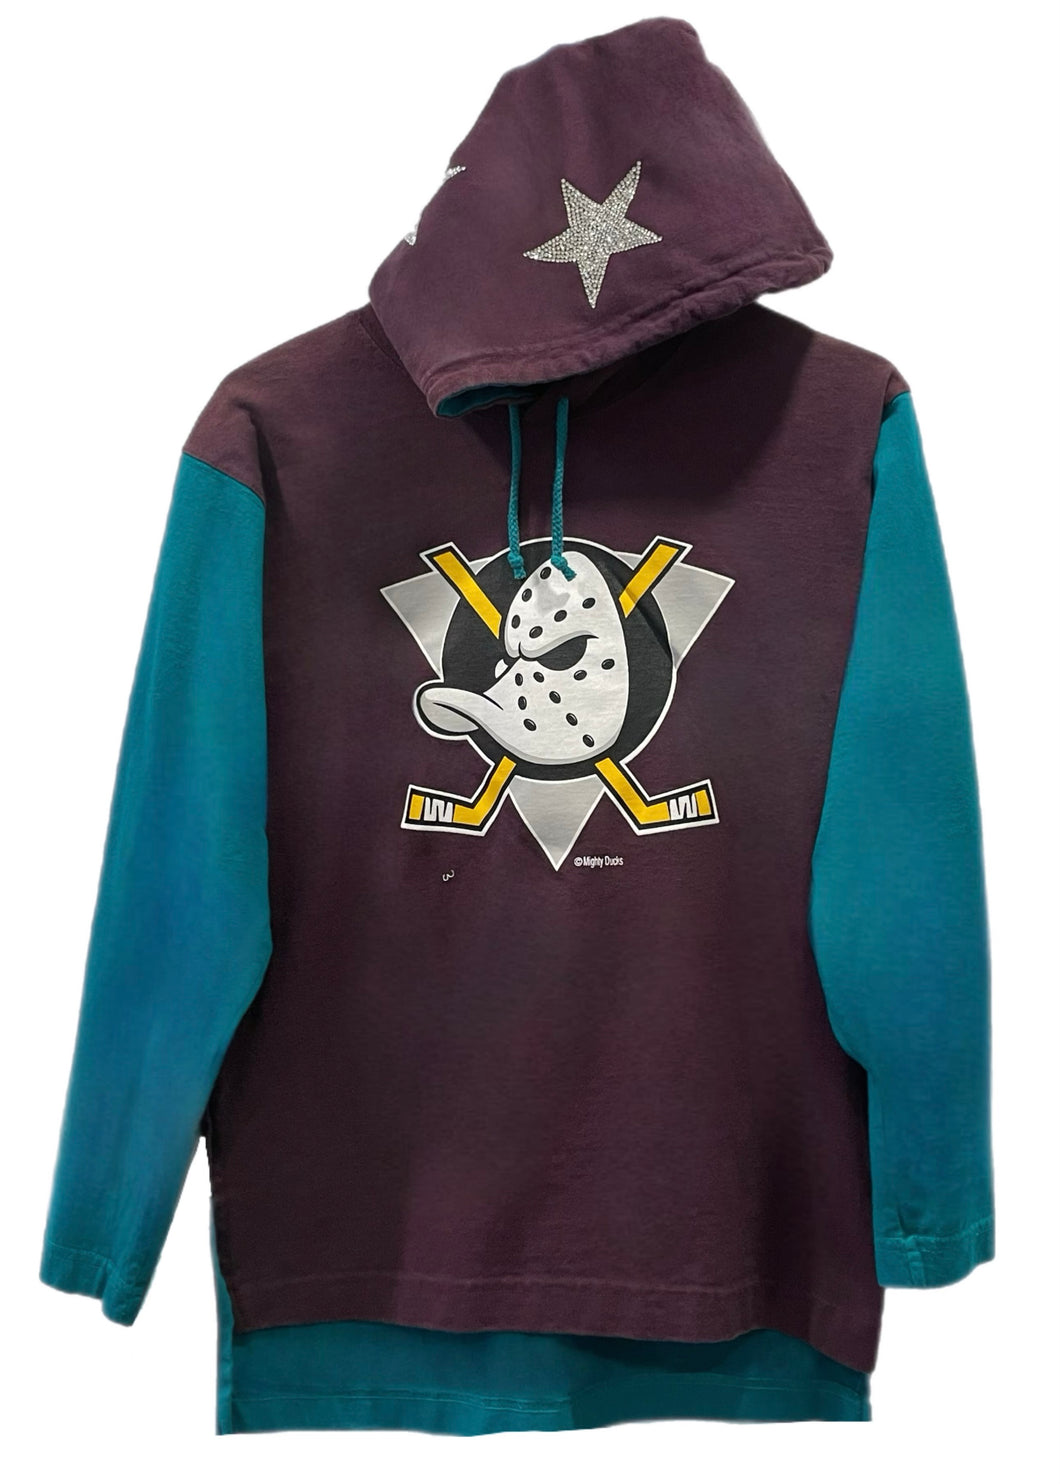 Anaheim Ducks, Hockey One of a KIND Vintage “Mighty Ducks” Hoodie with Crystal Star Design on Hood